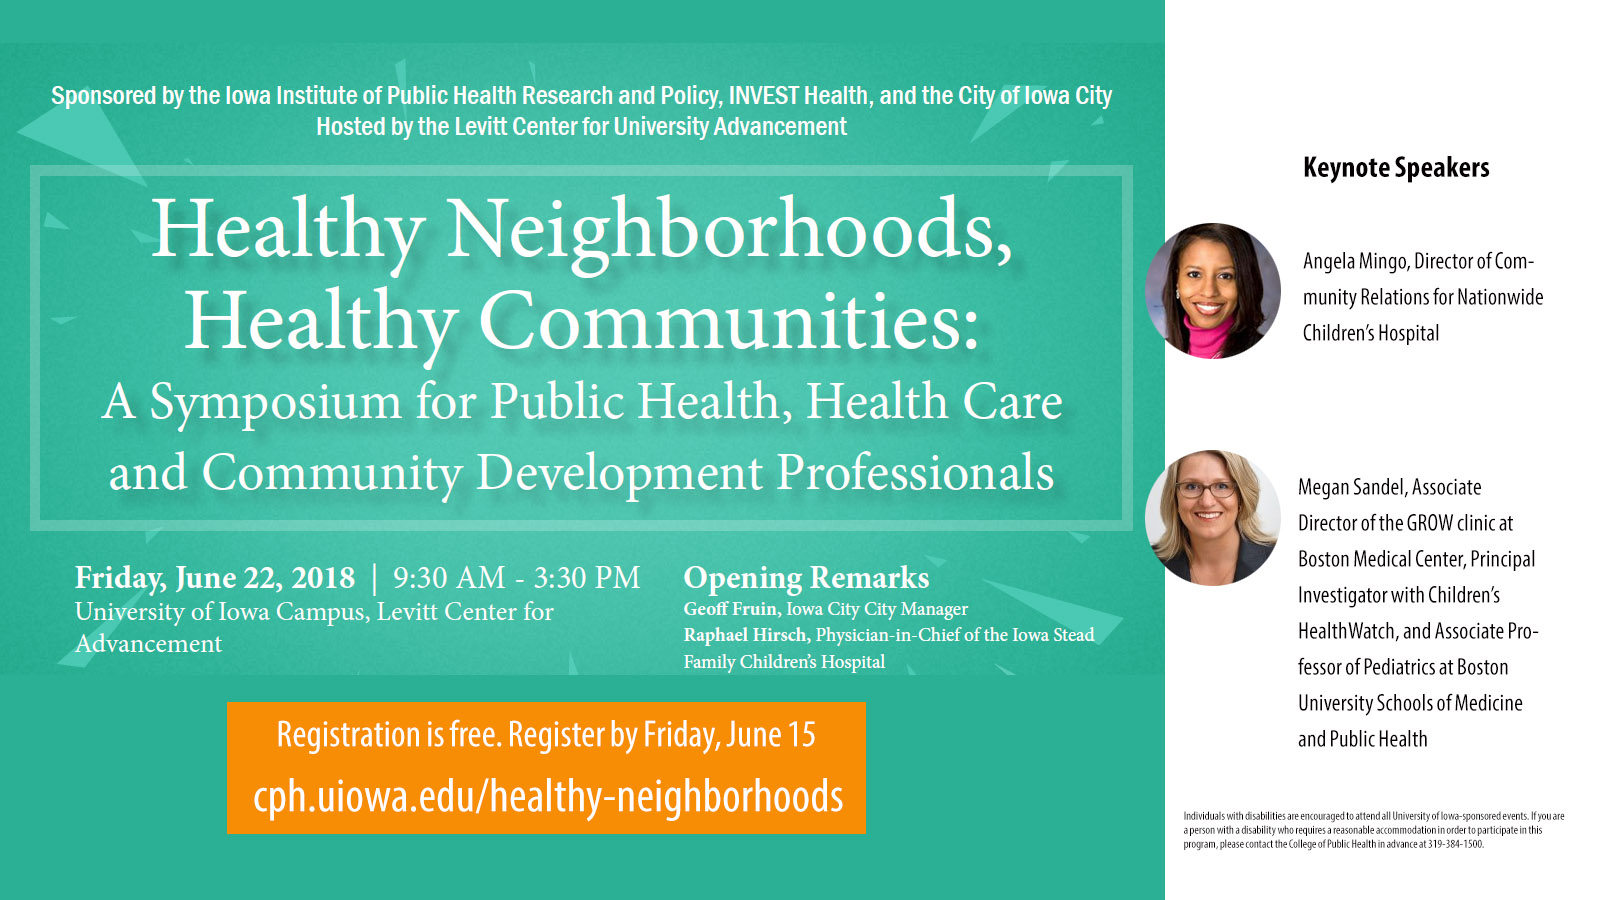 Healthy Neighborhoods, Healthy Communities Symposium promotional image